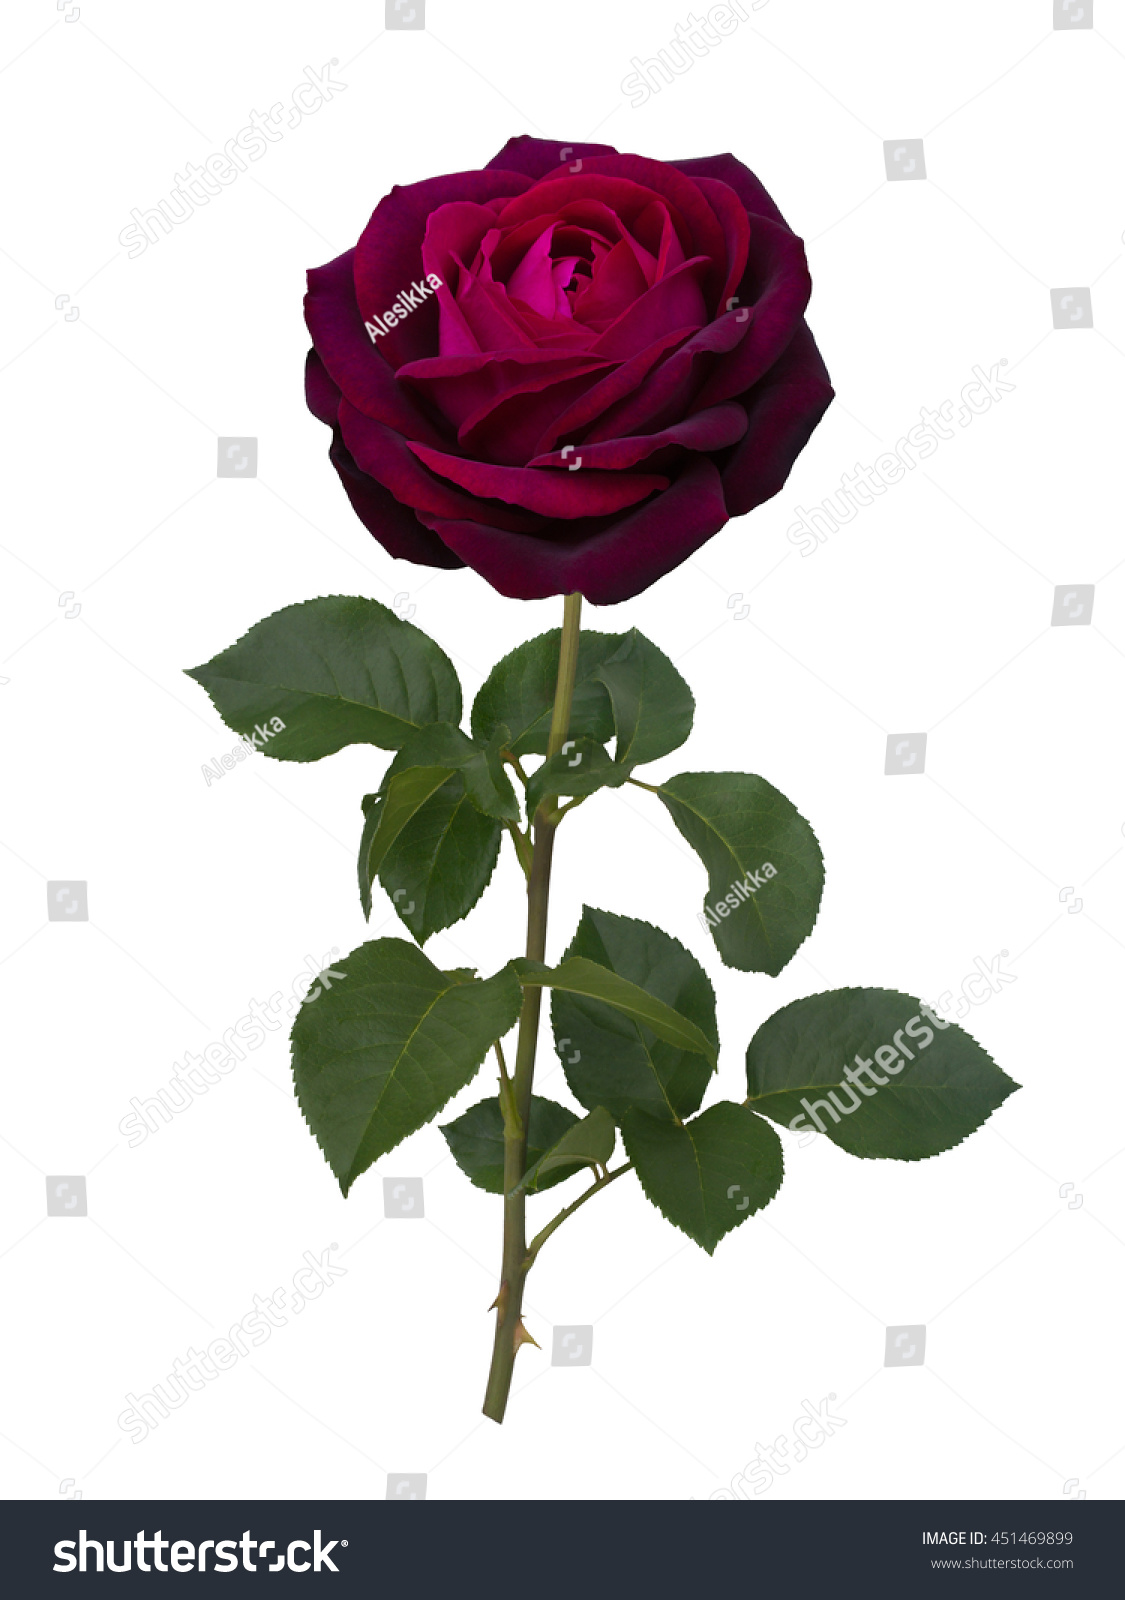 Dark Red Rose Isolated On White Stock Photo 451469899 Shutterstock